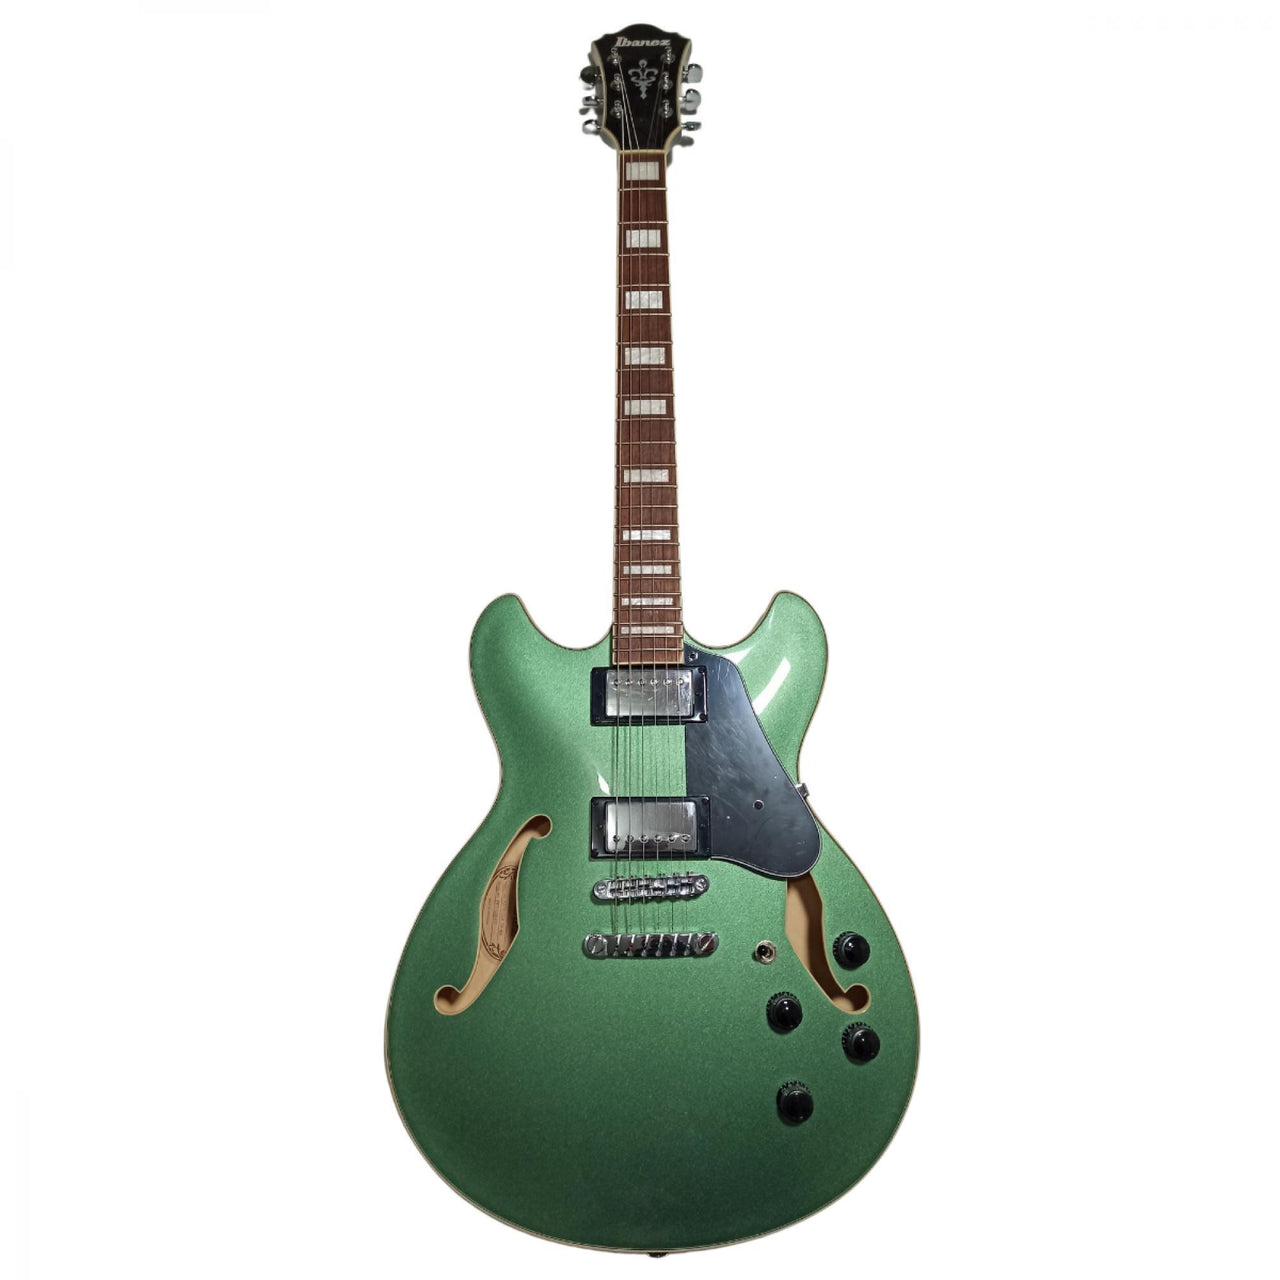 Guitarra Electrica Ibanez Artcore Verde Olivo Metalico, As73-olm